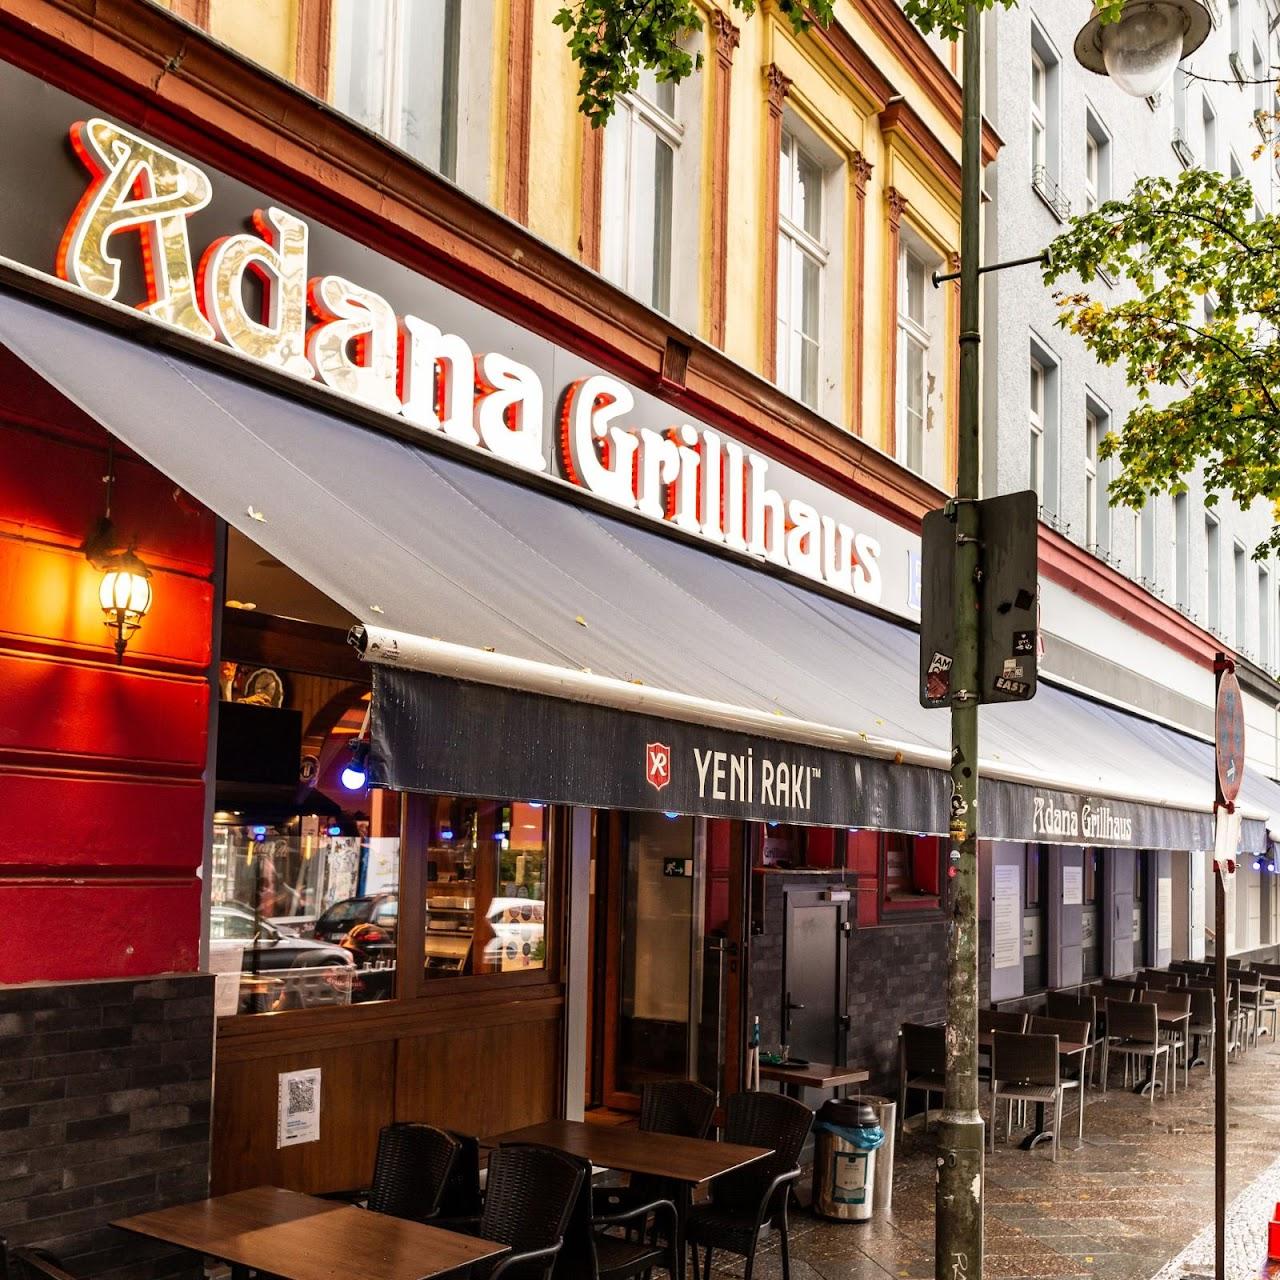 Restaurant "Adana Grillhaus - Kreuzberg" in Berlin